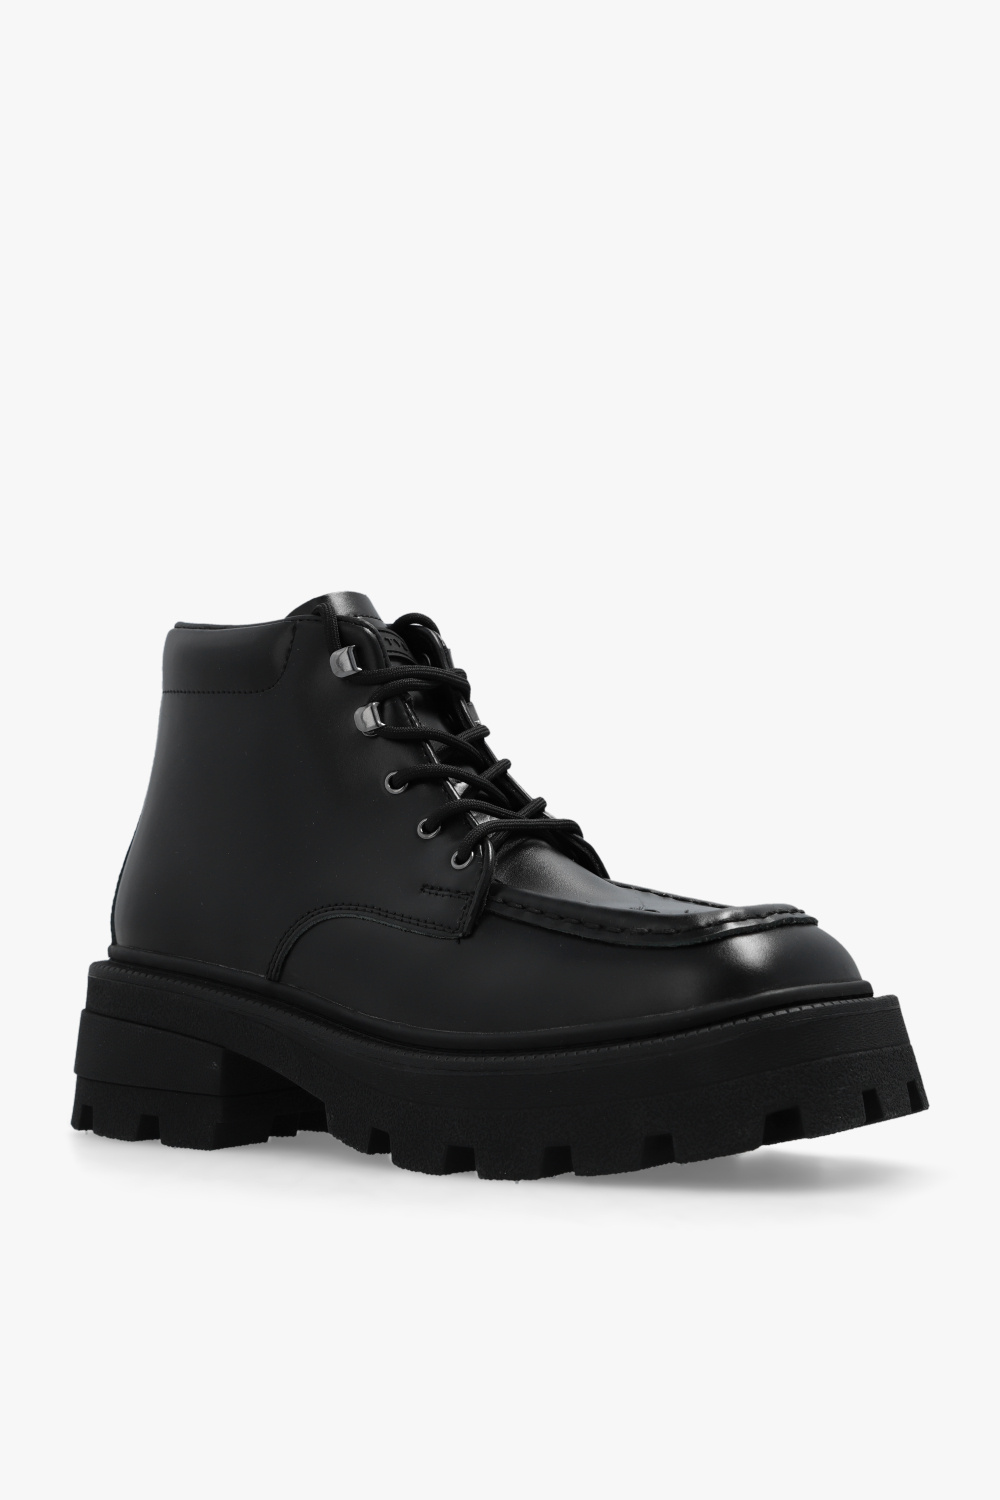 Eytys 'Tribeca' platform ankle boots